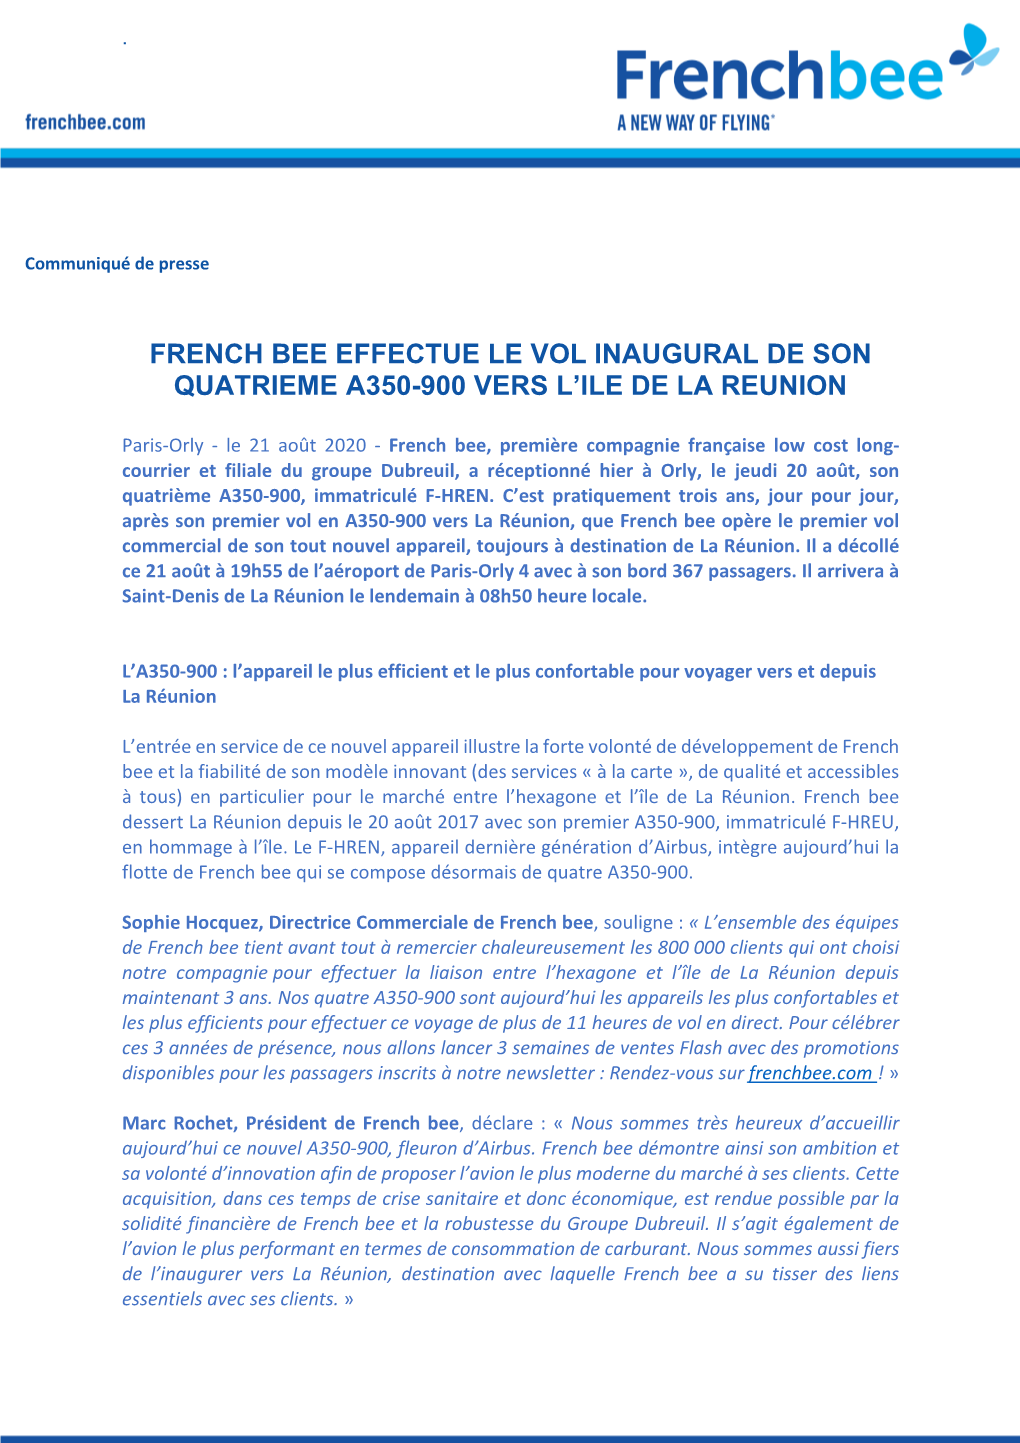 French Bee Effectue Le Vol Inaugural De Son Quatrieme A350-900 Vers L’Ile De La Reunion